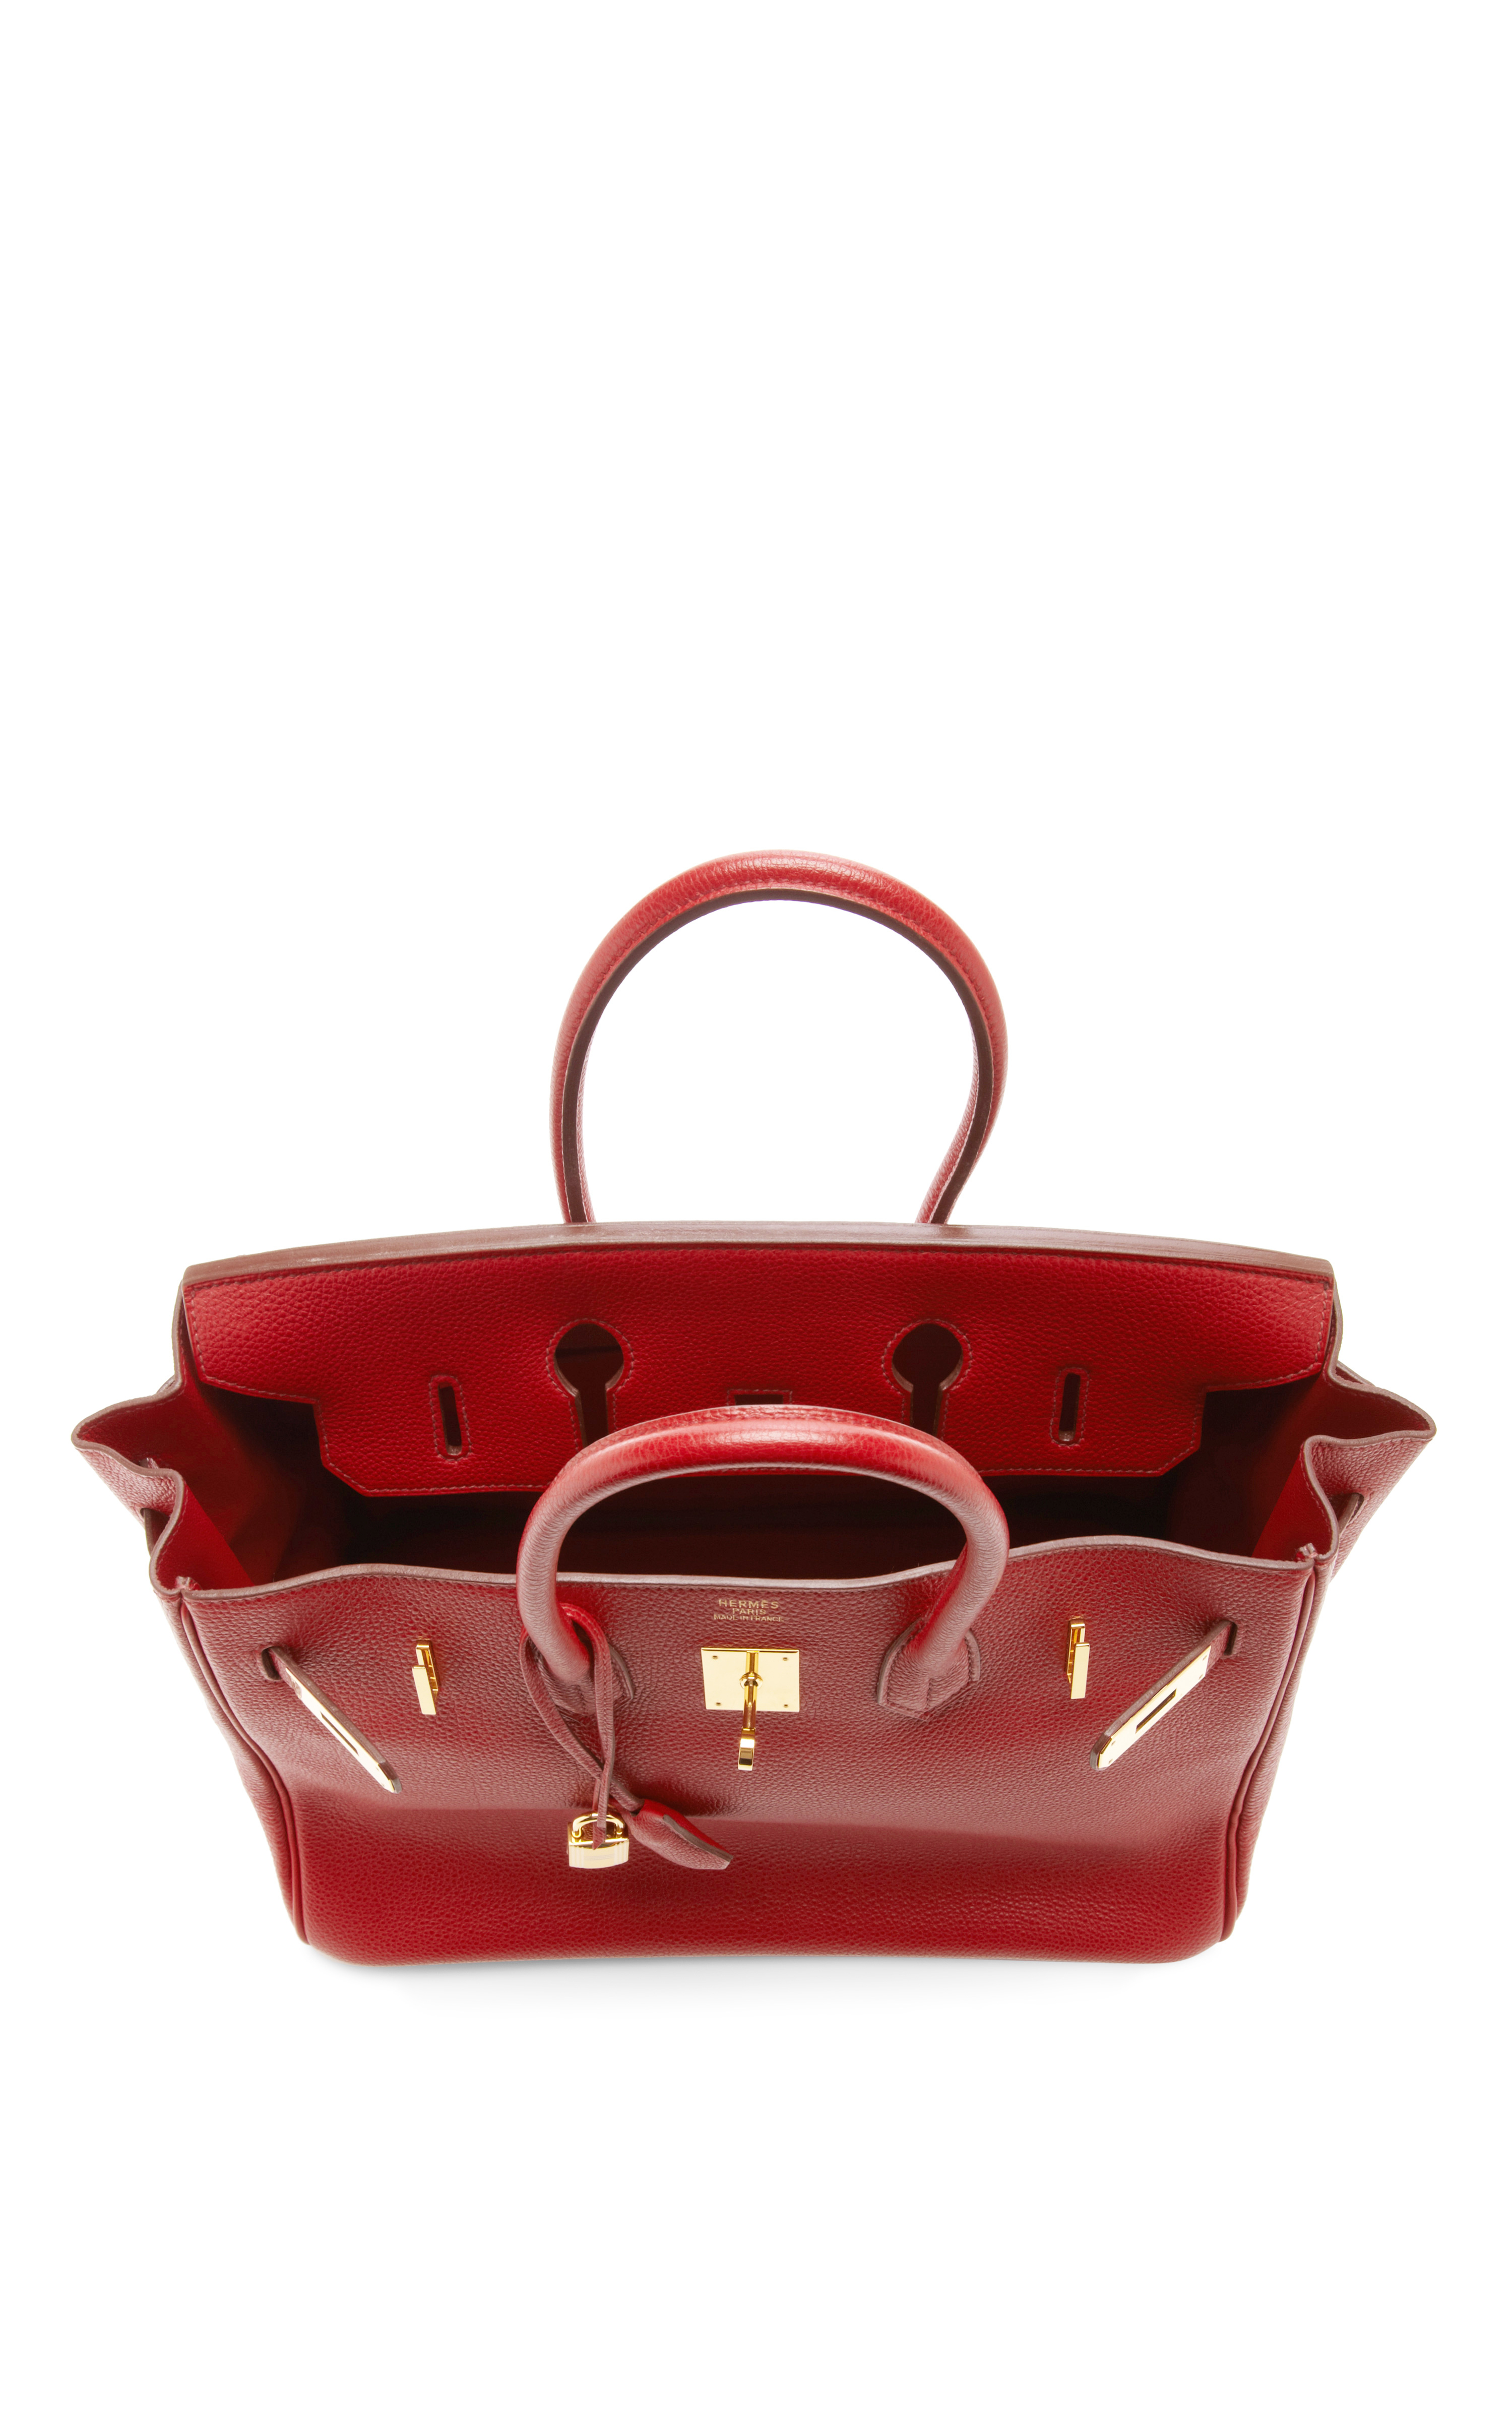 hermes red birkin togo leather satchel  